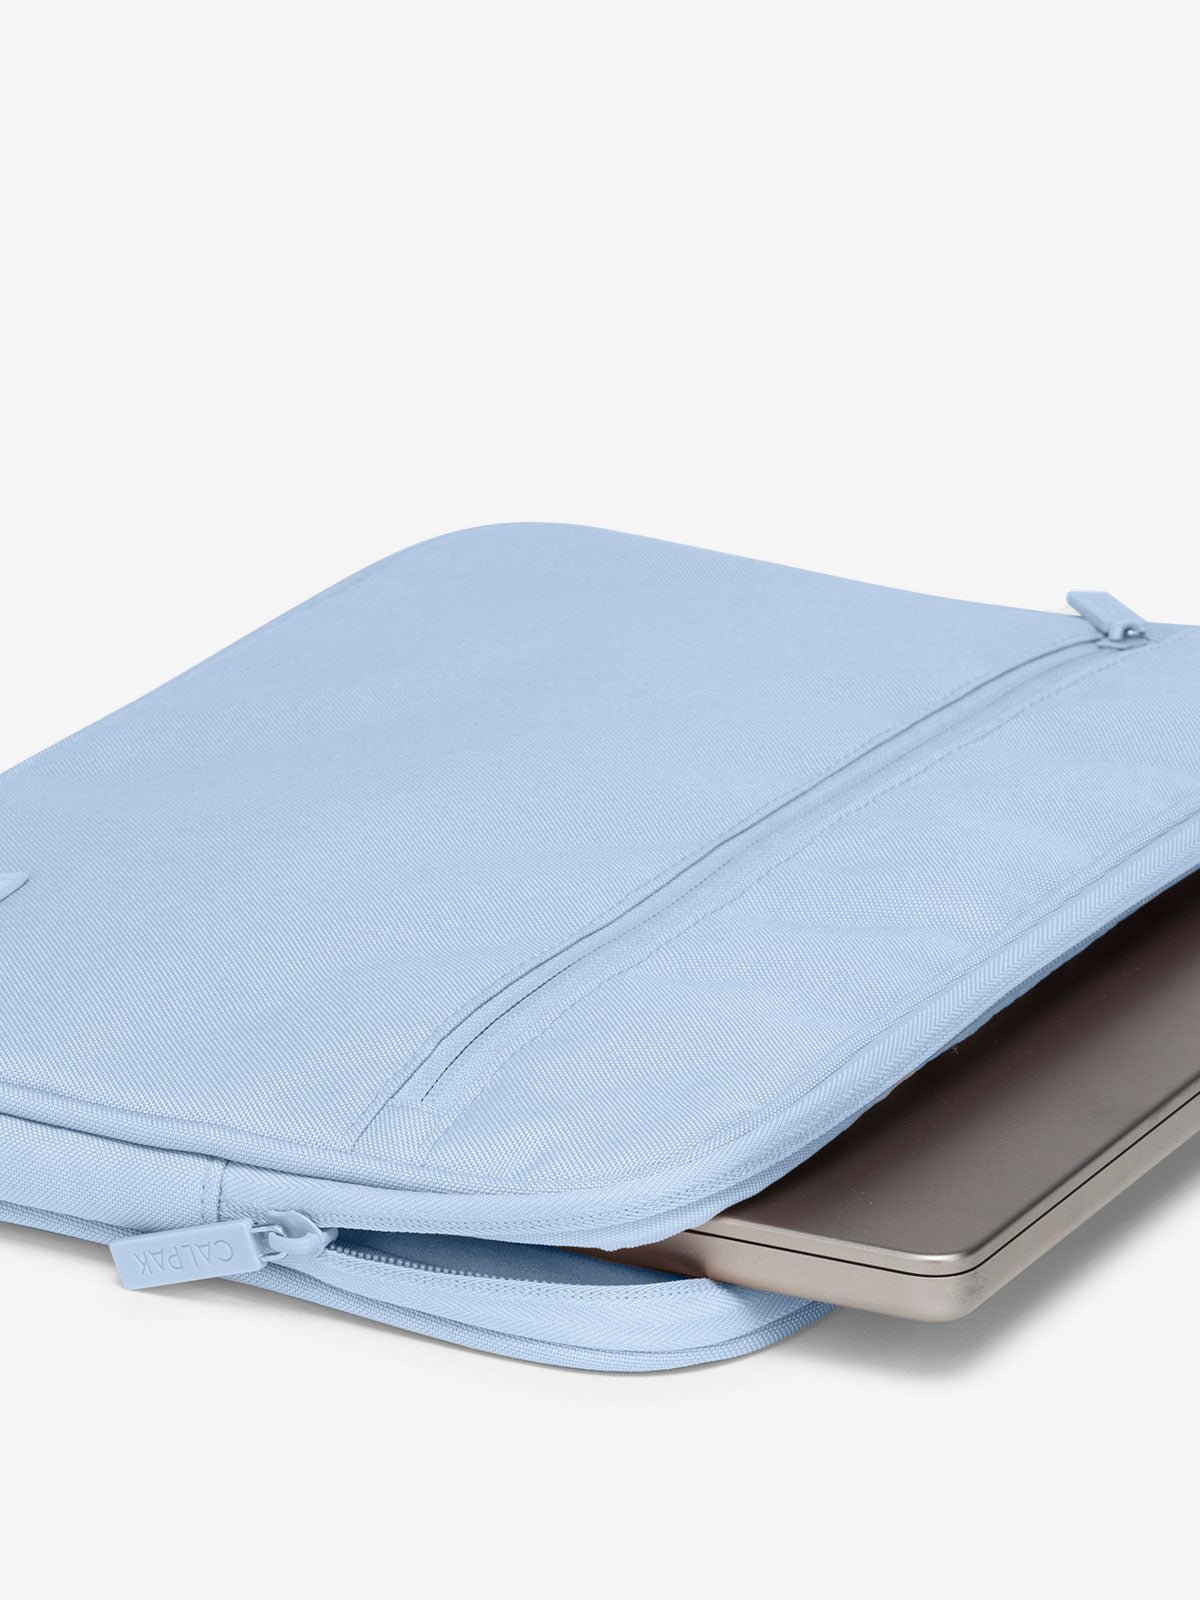 CALPAK 13-14" laptop sleeve with front zipper pouch in light blue